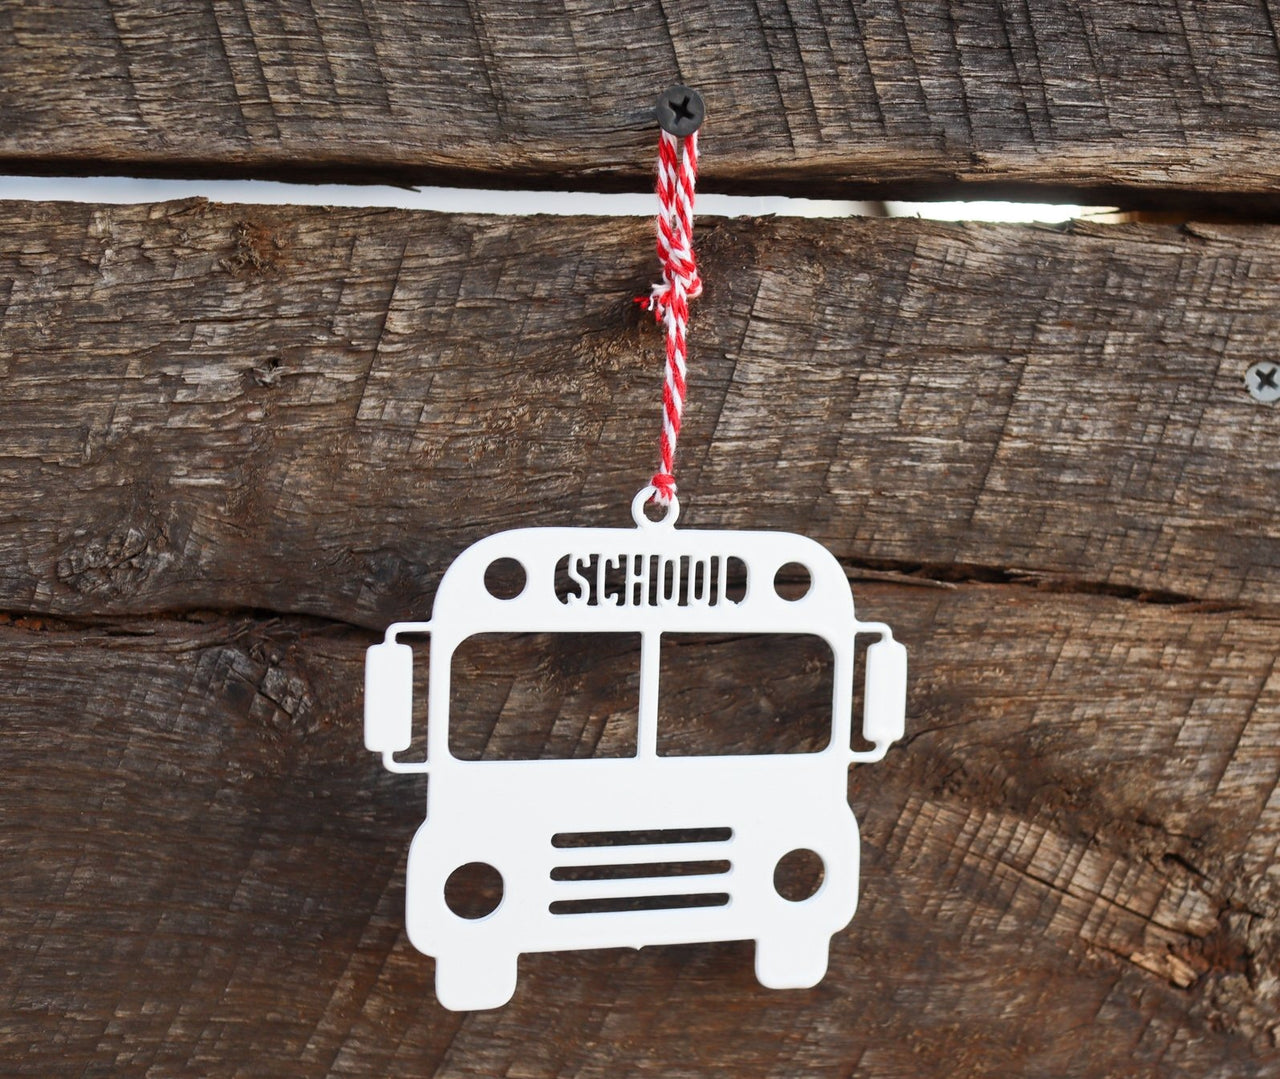 School Bus Christmas Ornament - Holiday Stocking Stuffer Gift - Tree Home Decor